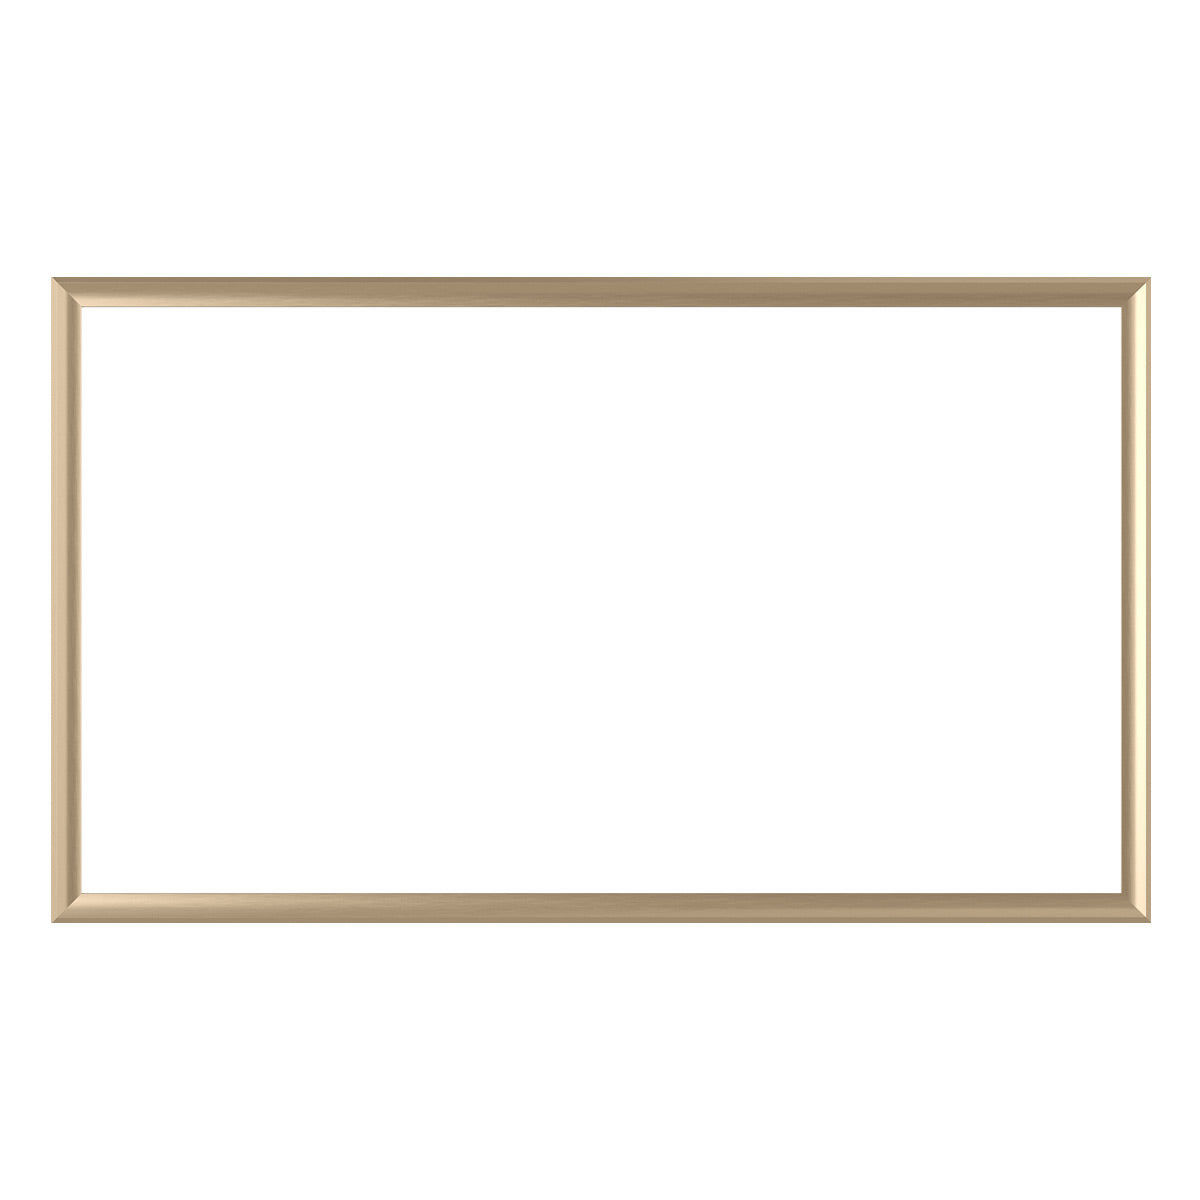 Deco TV Frames 50" Customizable Alloy Prismatic Frame for Samsung The Frame TV 2021-2023 (Pale Gold)